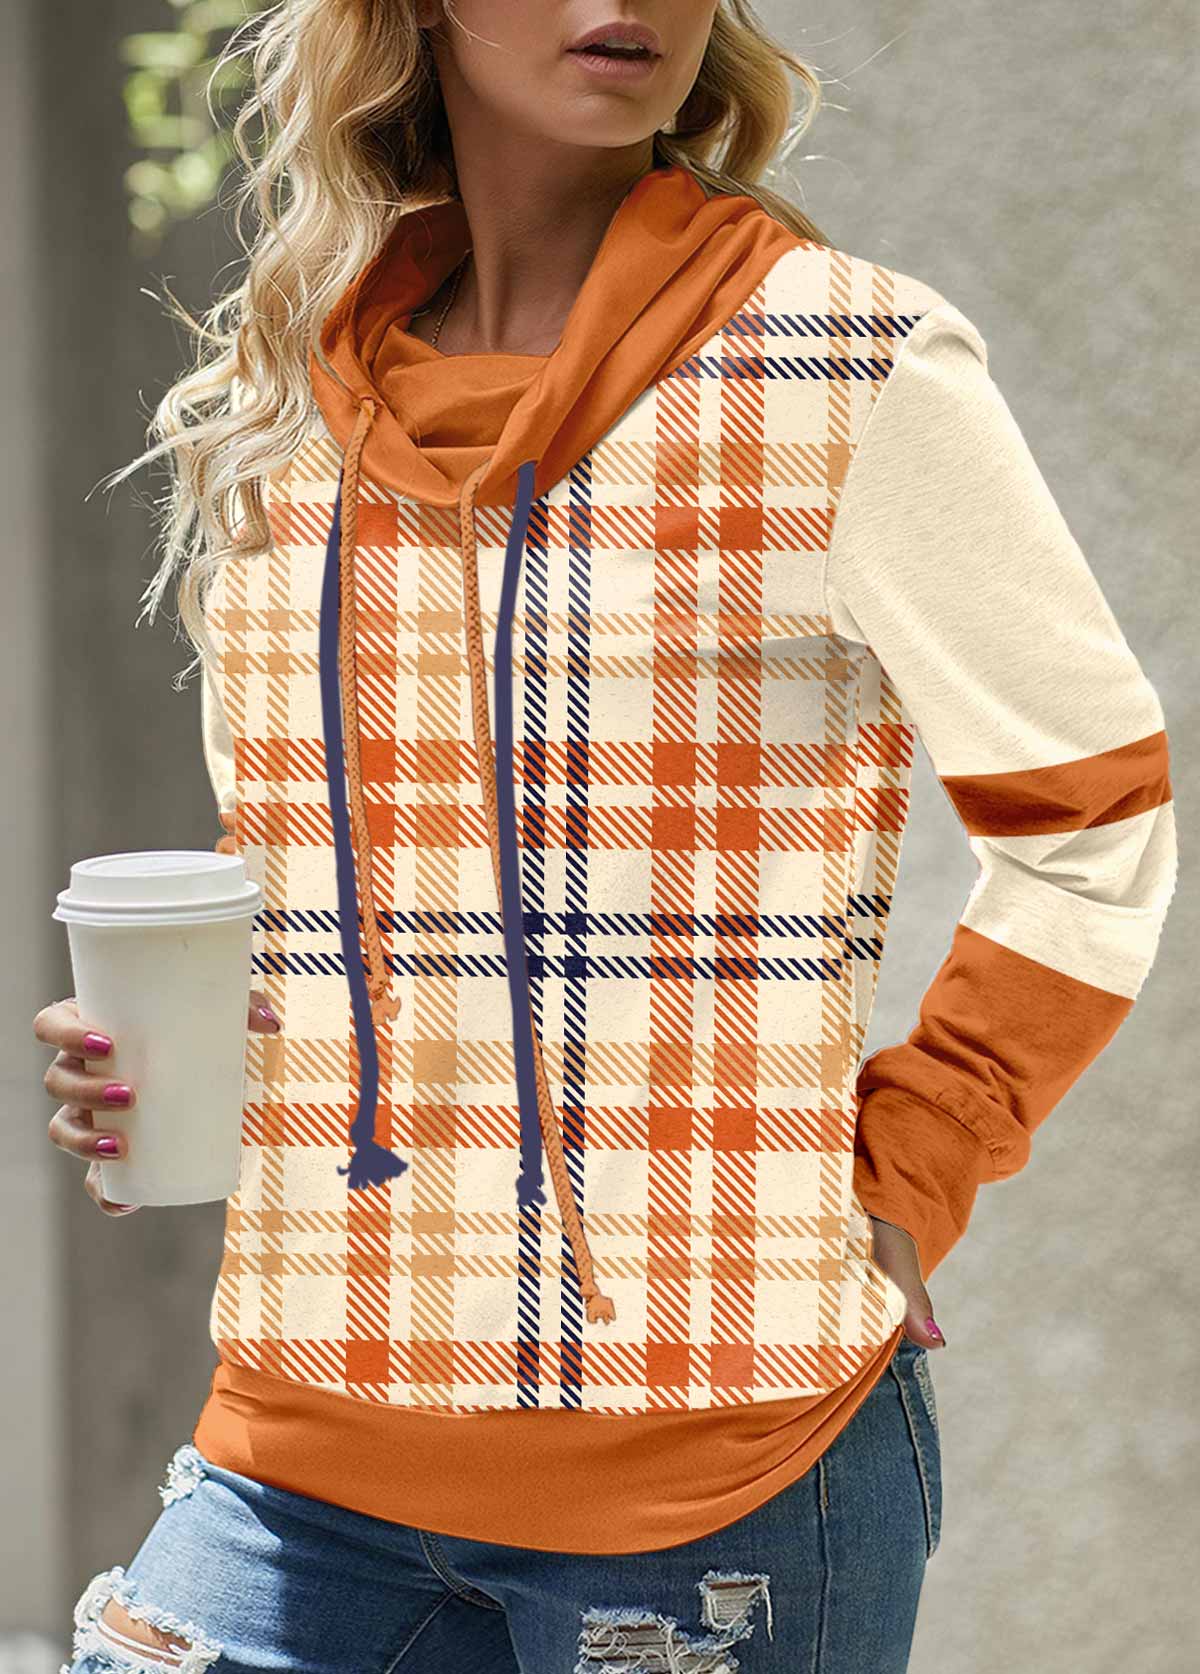 ROTITA Patchwork Plaid Orange Cowl Neck Long Sleeve Sweatshirt